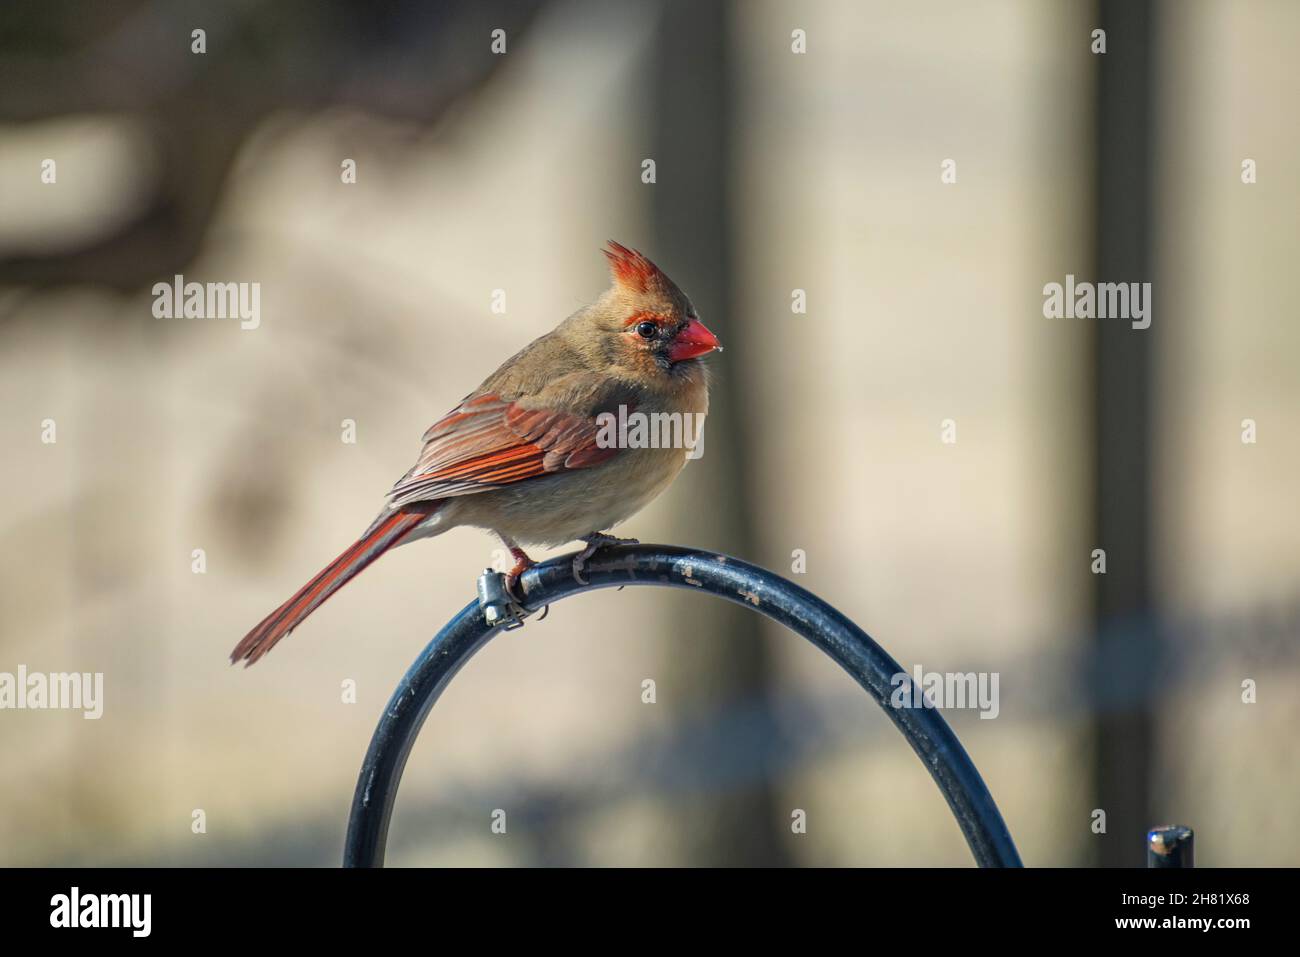 Female Northern Cardinal (Cardinalis cardinalis) perched on the metal pole Stock Photo